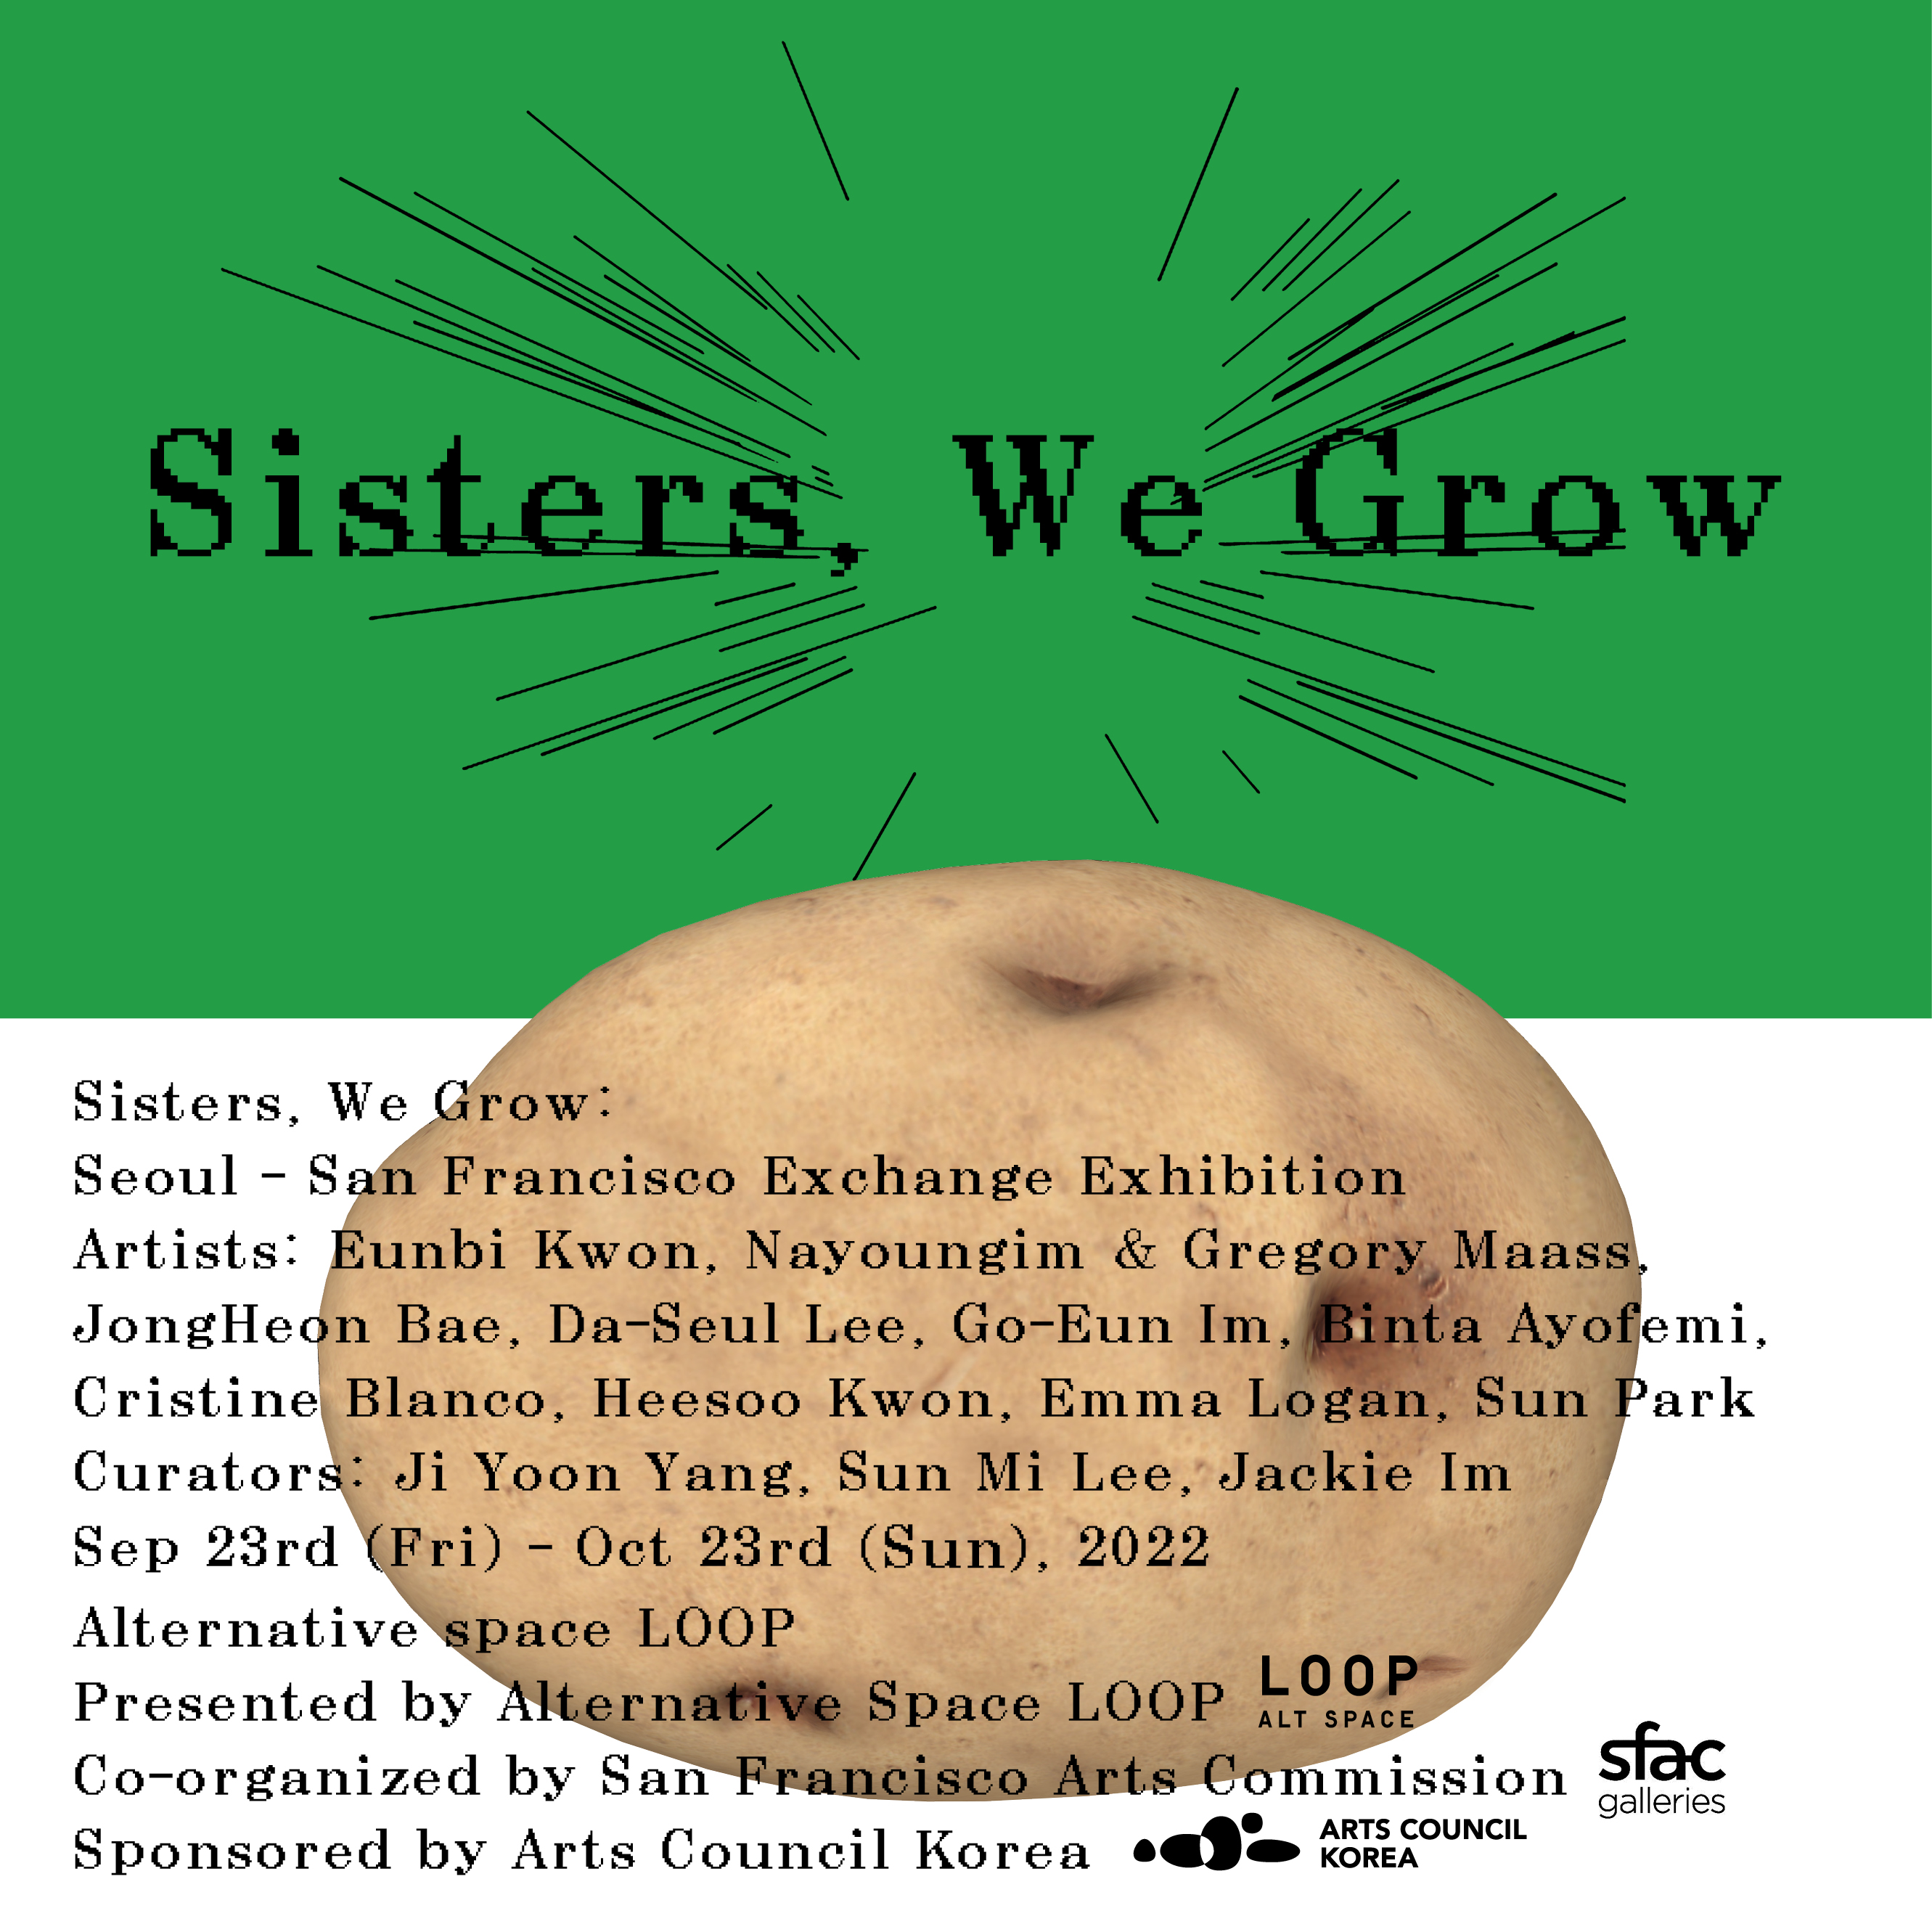 Sisters, We Grow: Seoul - San Francisco Exchange Exhibition